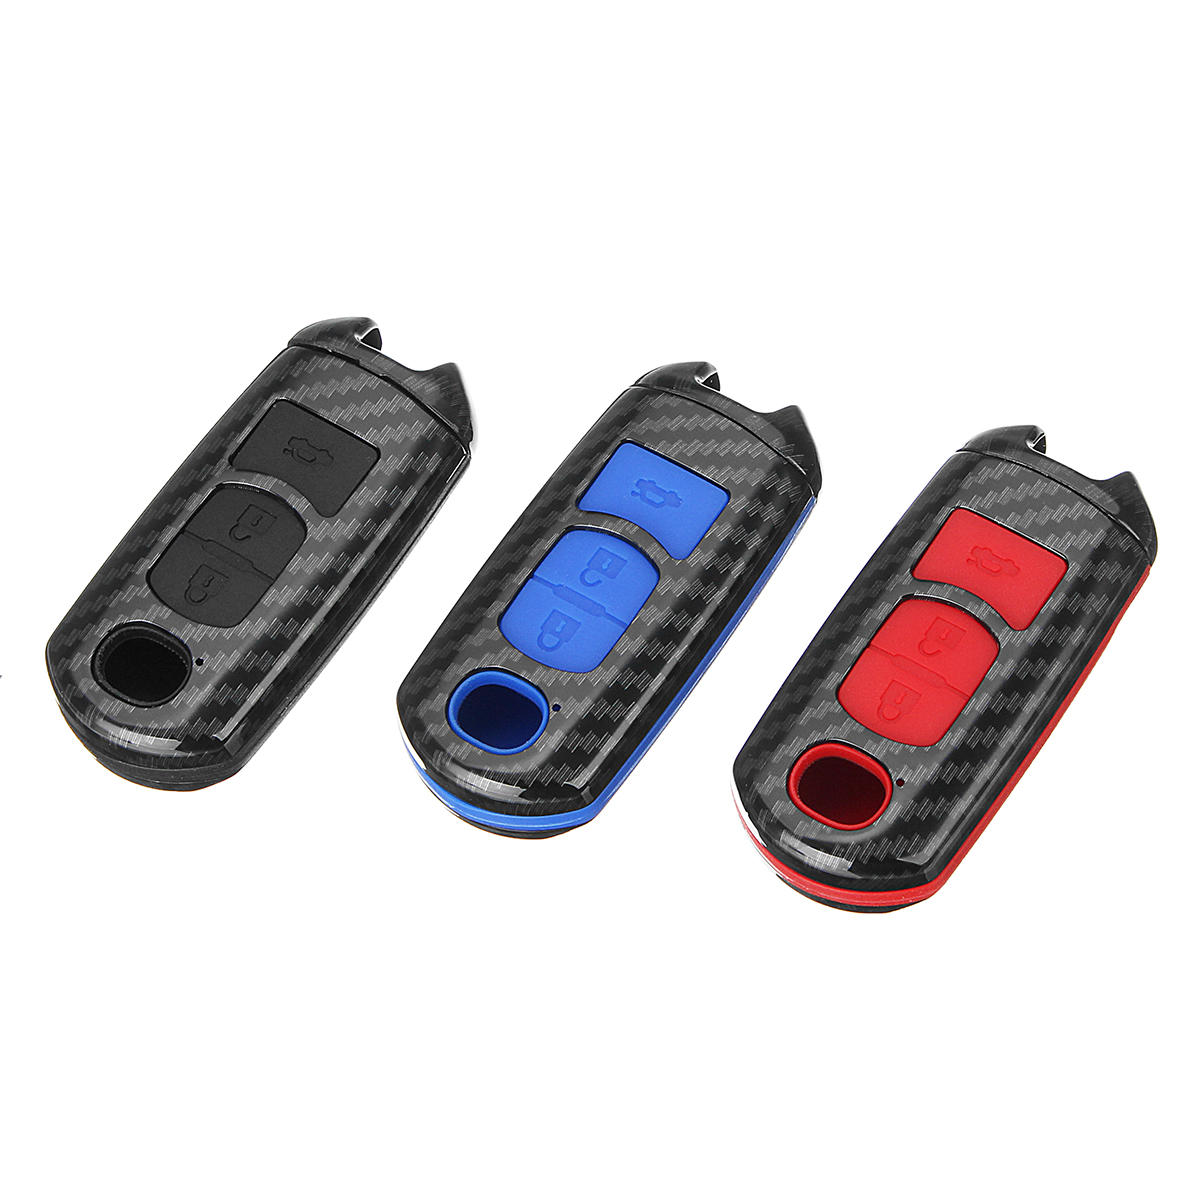 

ABS Carbon Fiber Дистанционный Smart Car Key Чехол/Сумка Обложка Fob Shell для Mazda 3/5/6 / CX3 / CX5